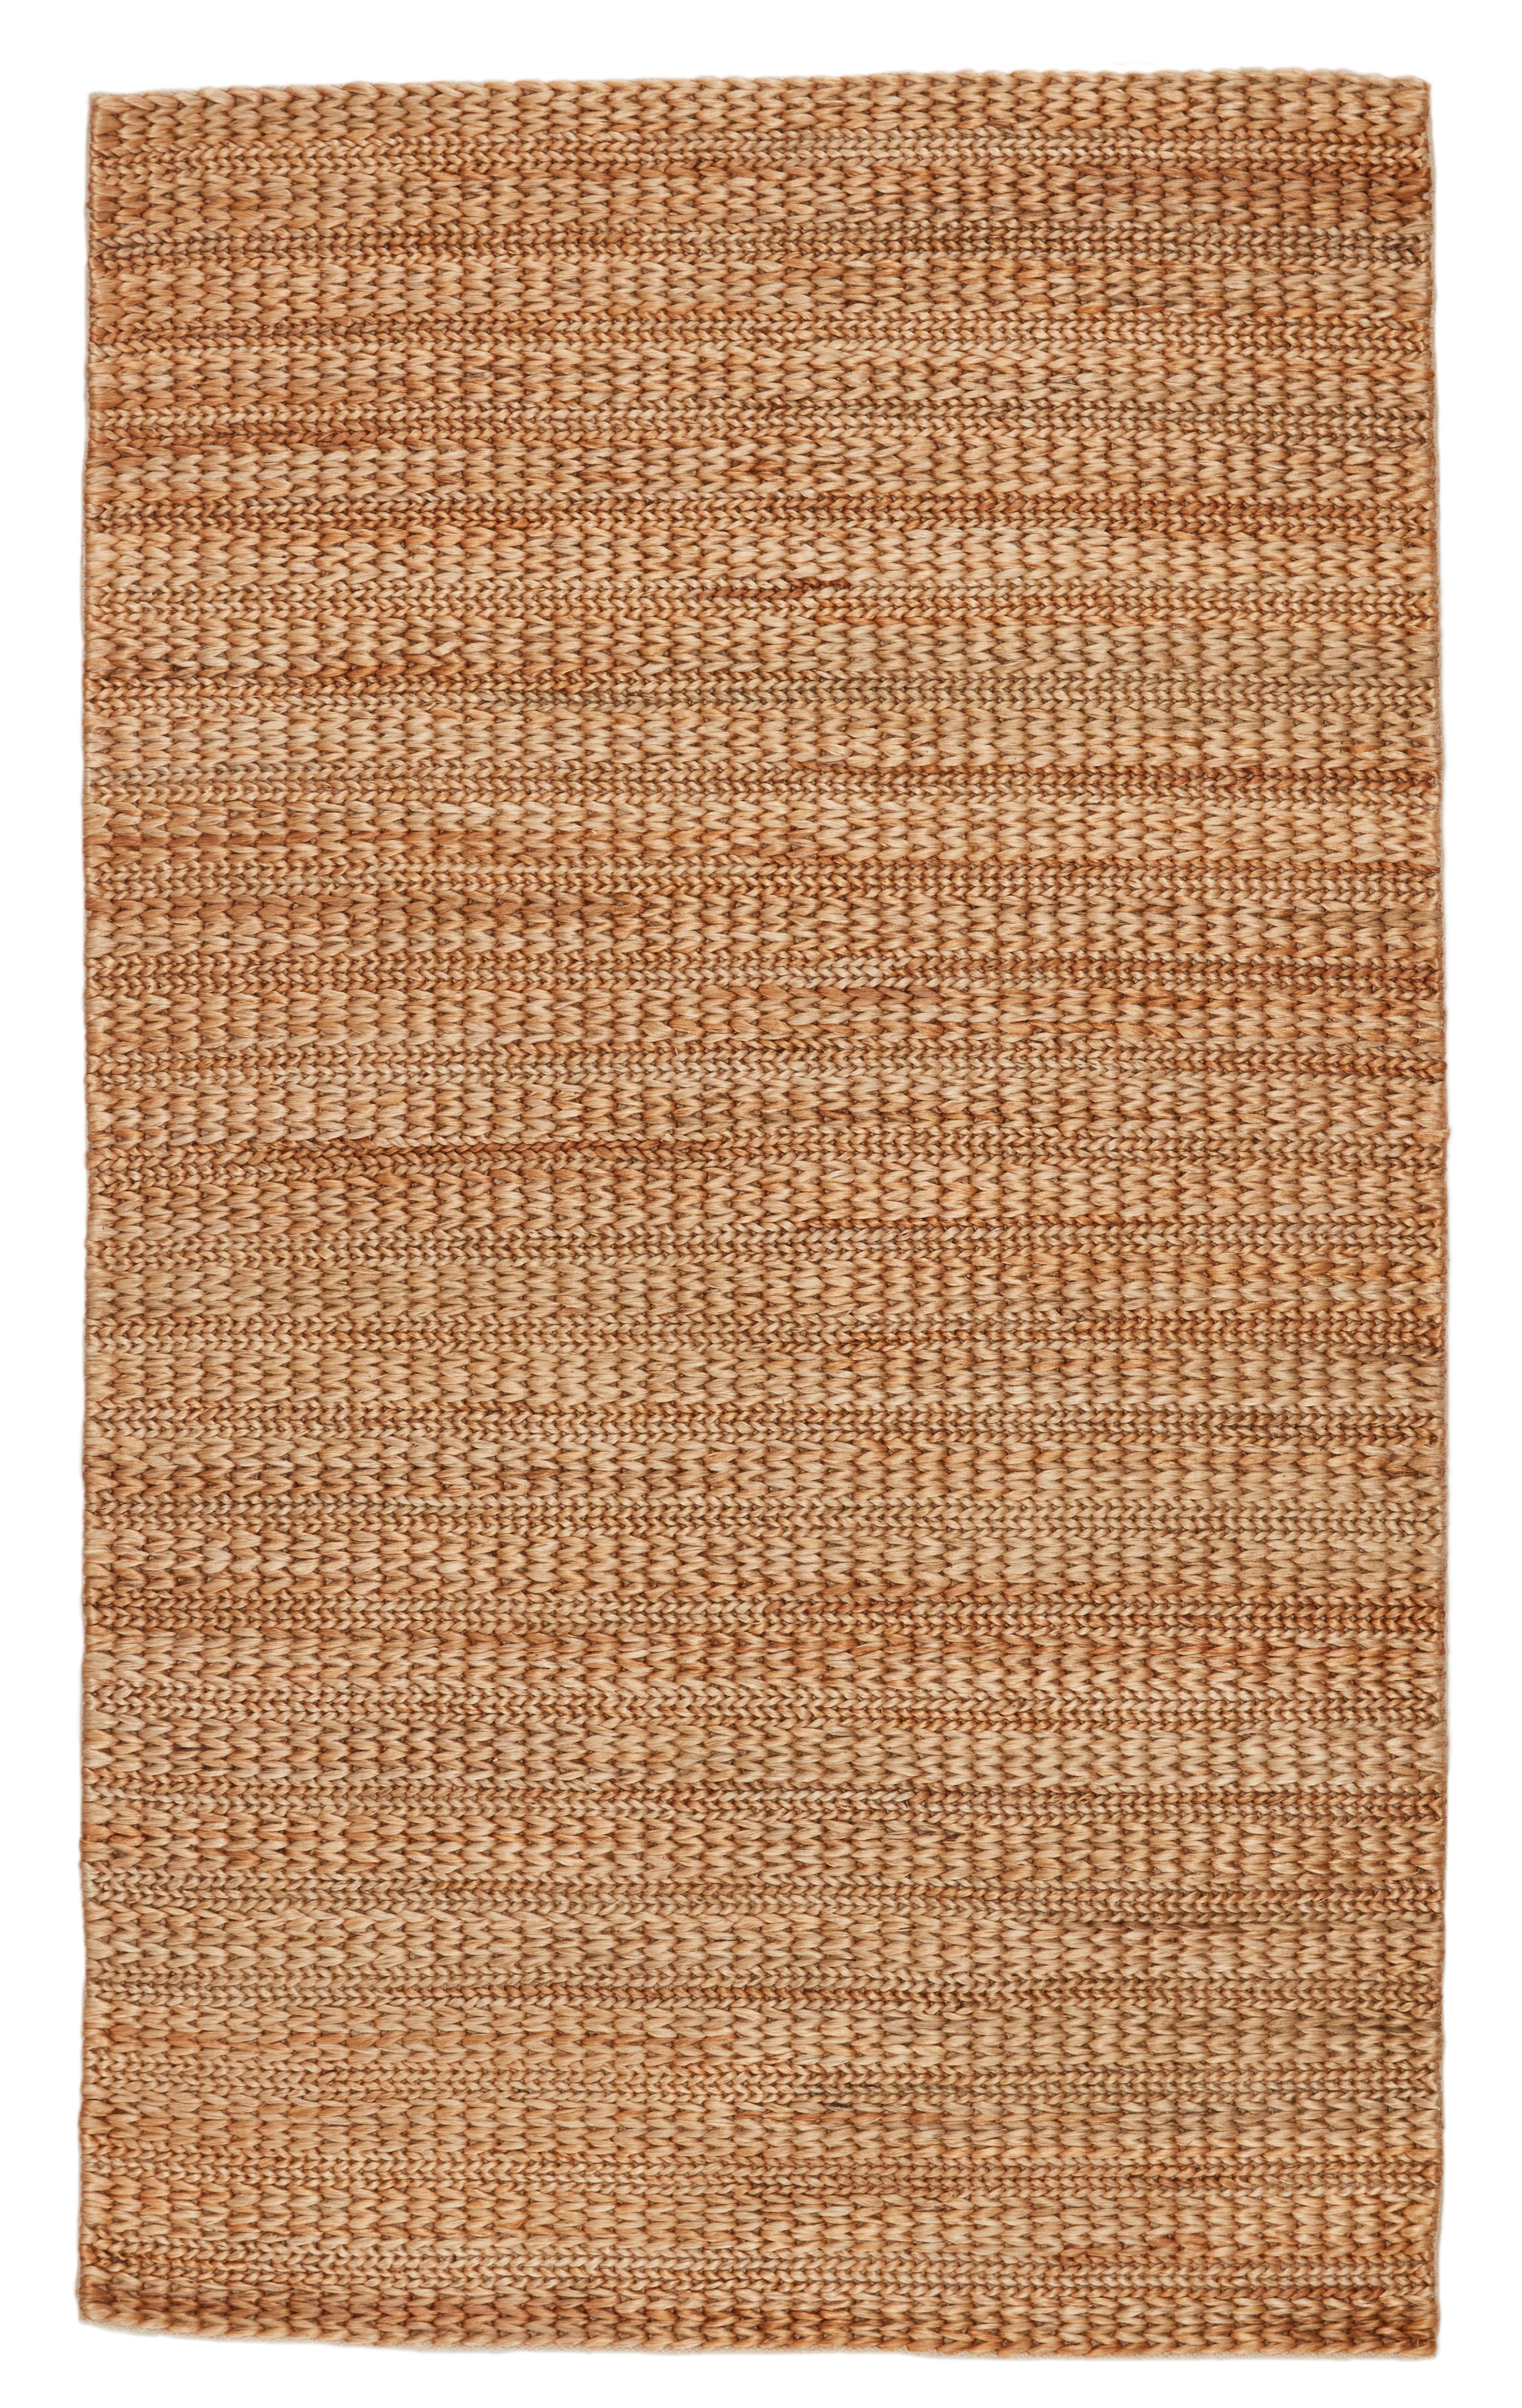 Poncy Natural Solid Tan Area Rug (8'X10') - Image 0